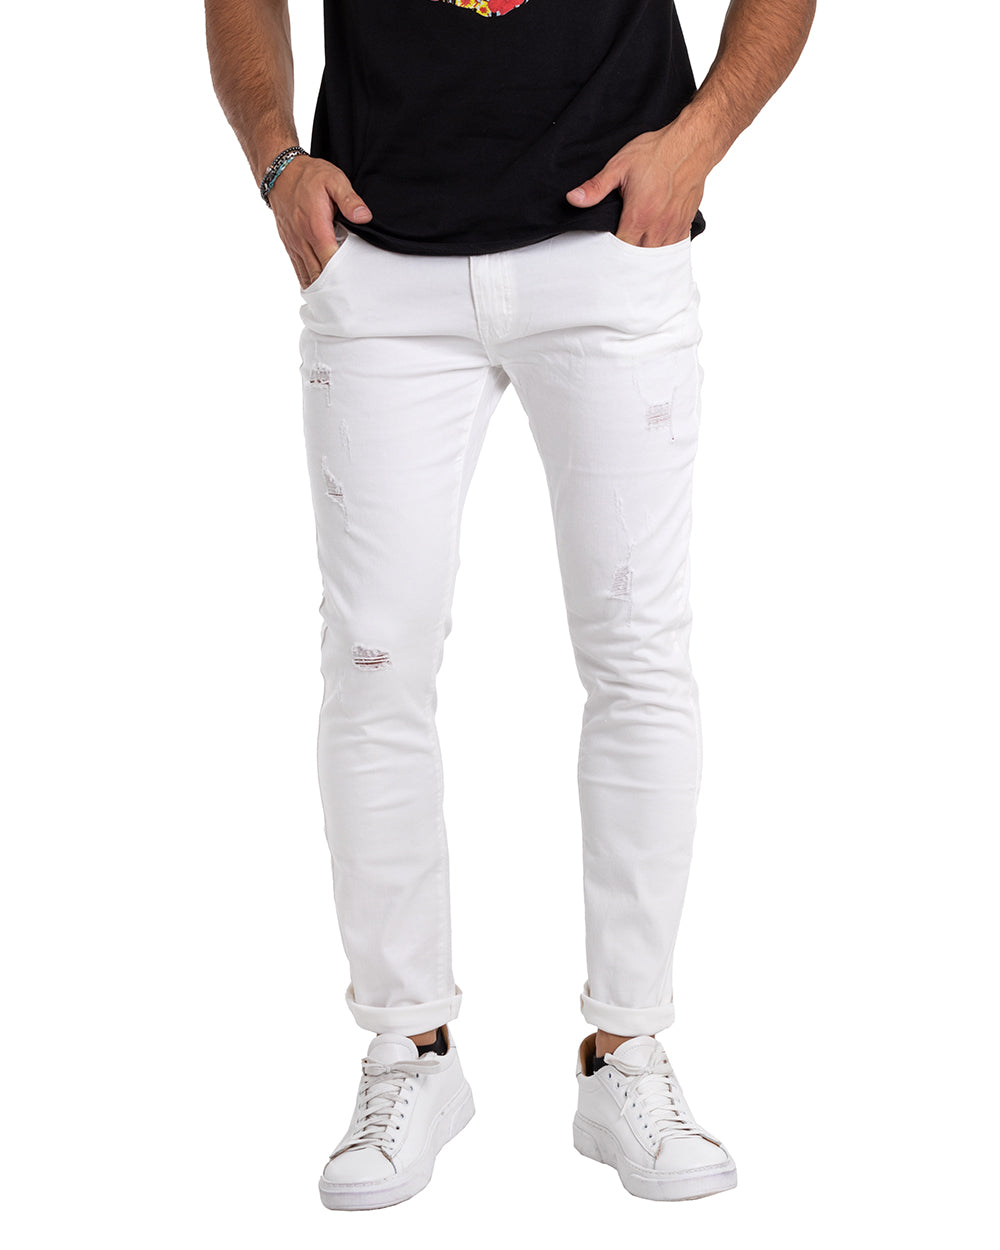 Pantaloni Jeans Uomo Slim Fit Bianco Rotture Abrasioni Cinque Tasche Casual GIOSAL-P5374A